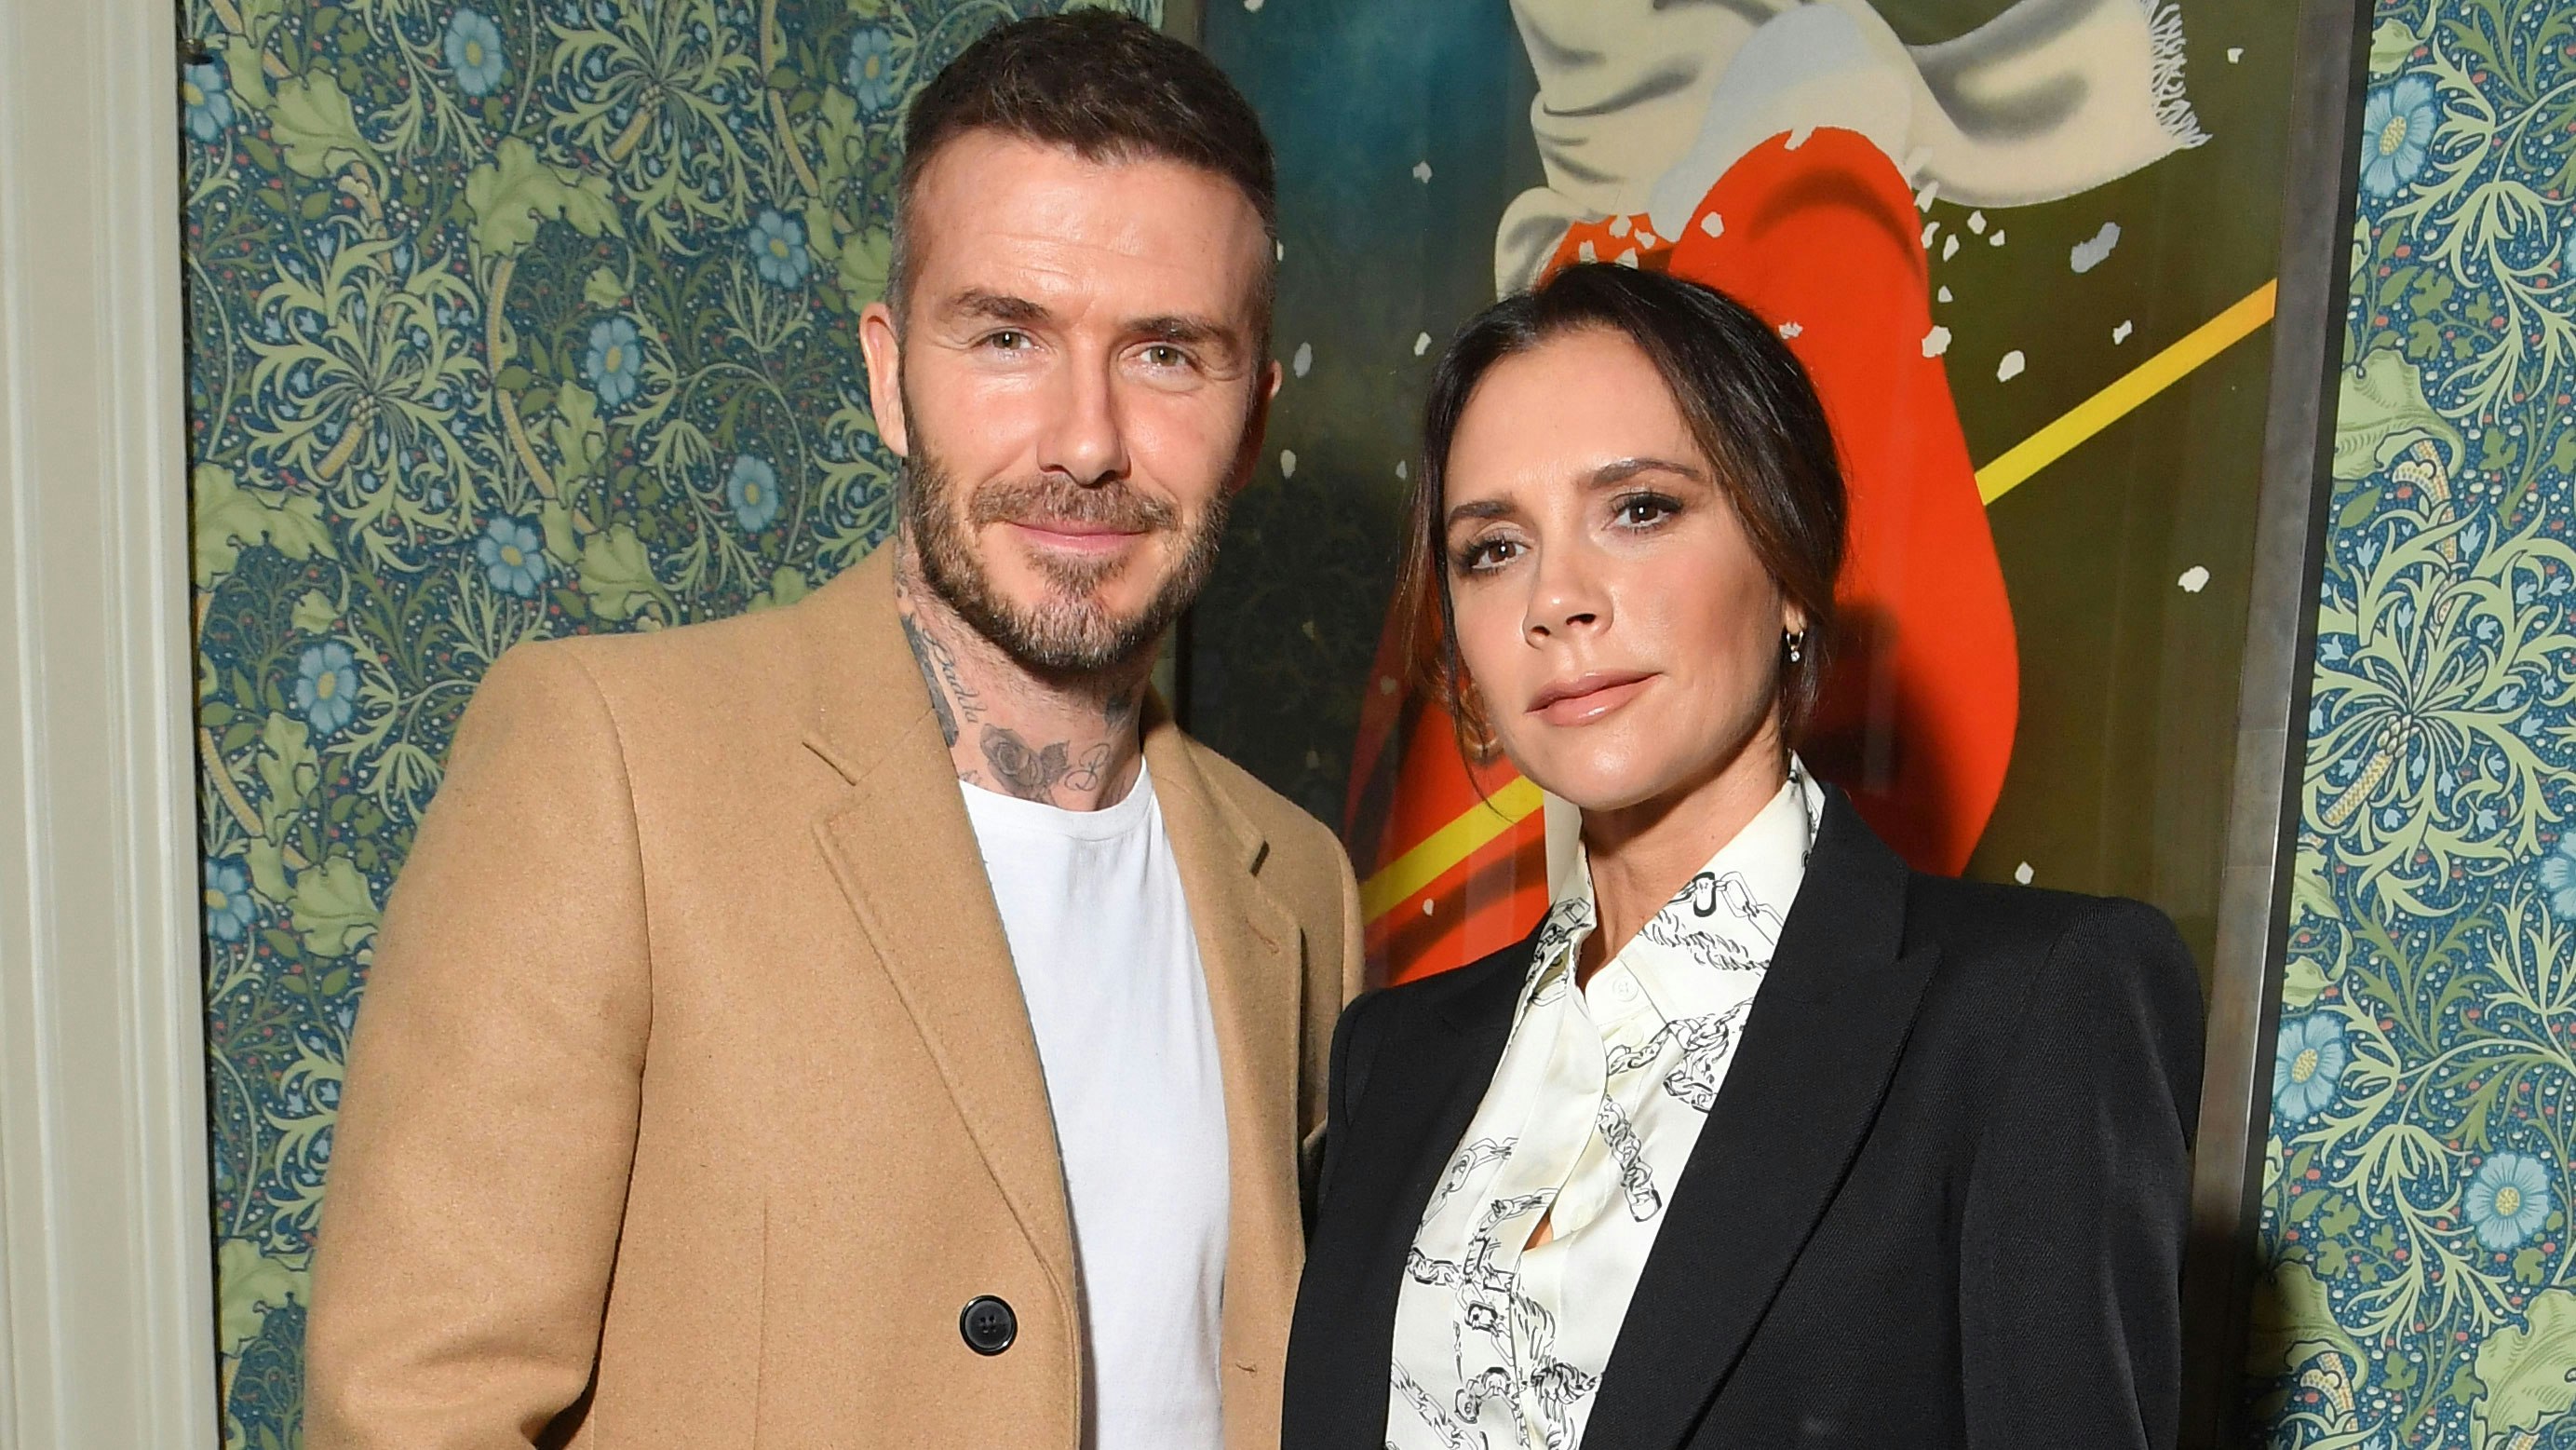 David Beckham and Victoria Beckham look glum on casual date night